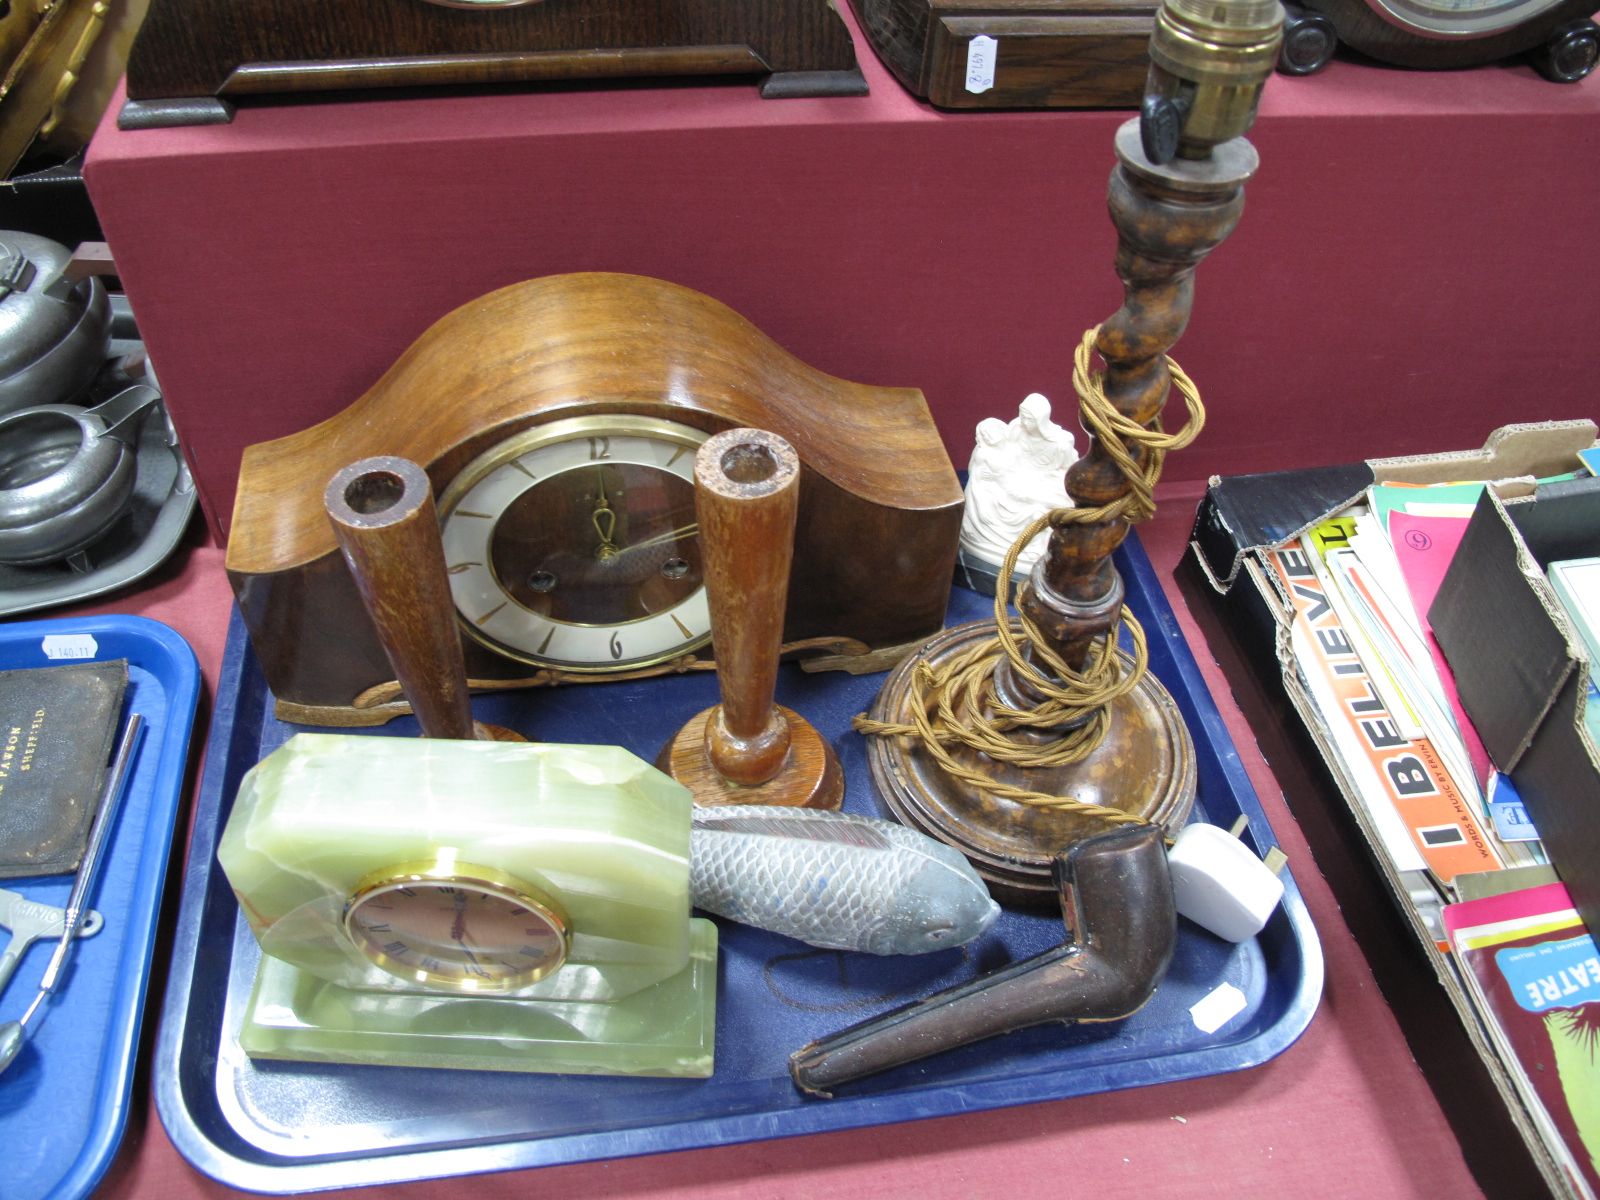 Onyx and Walnut Cased Mantel Clocks, smokers pipe, barley twist lamp, candlesticks:- One Tray